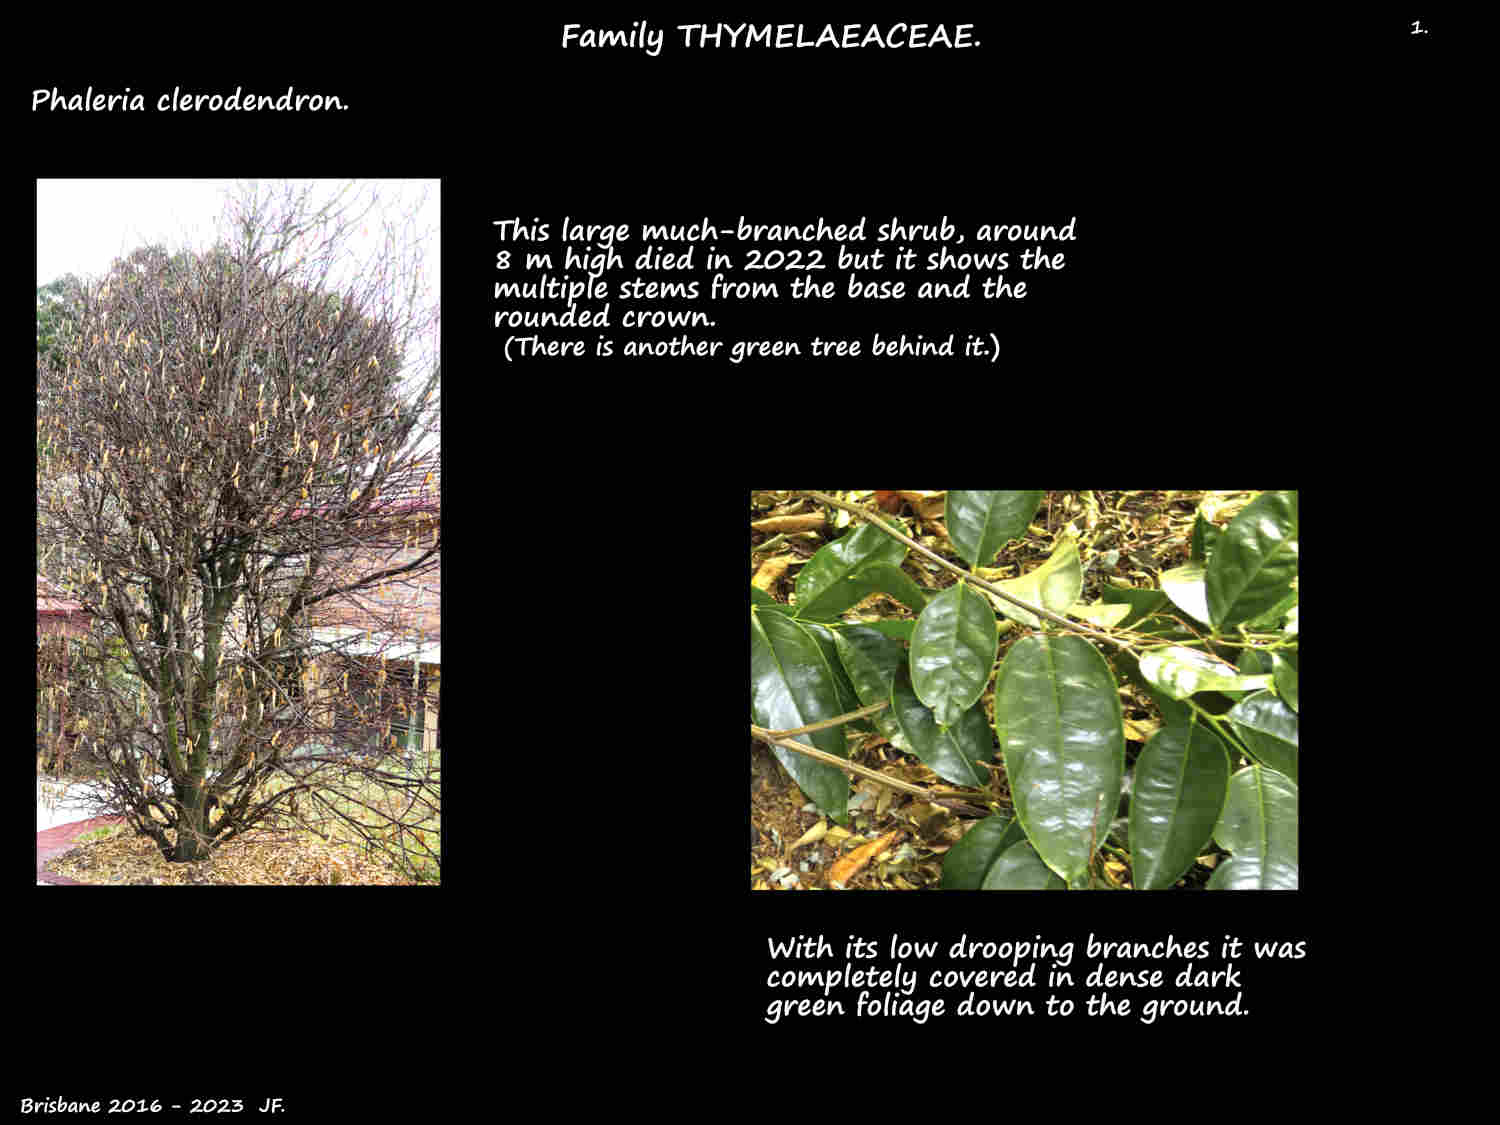 1 A large Phaleria clerodendron shrub